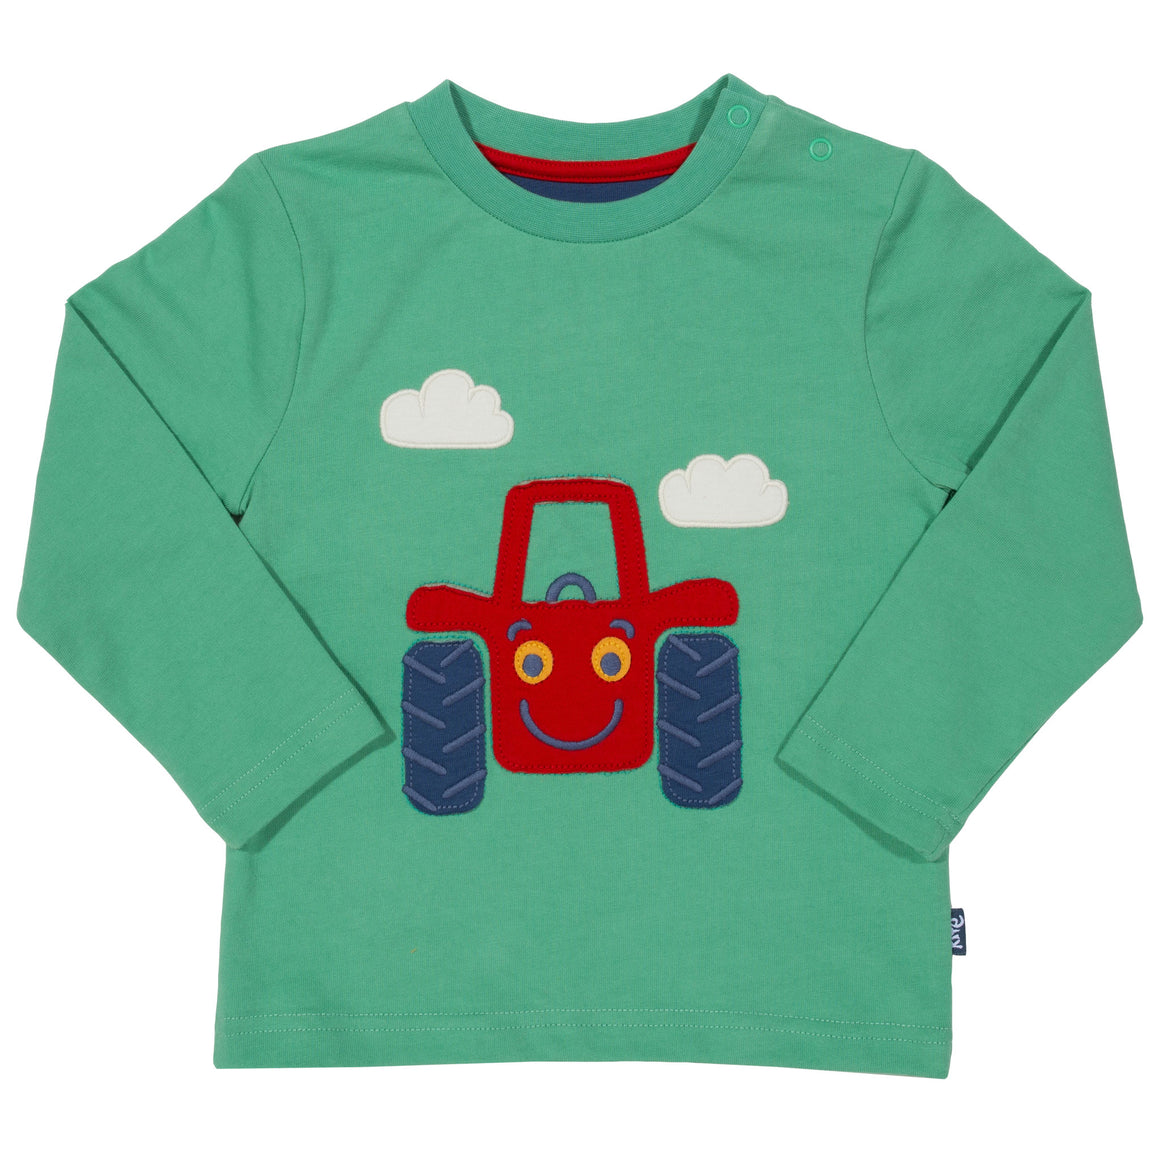 Happy tractor t-shirt